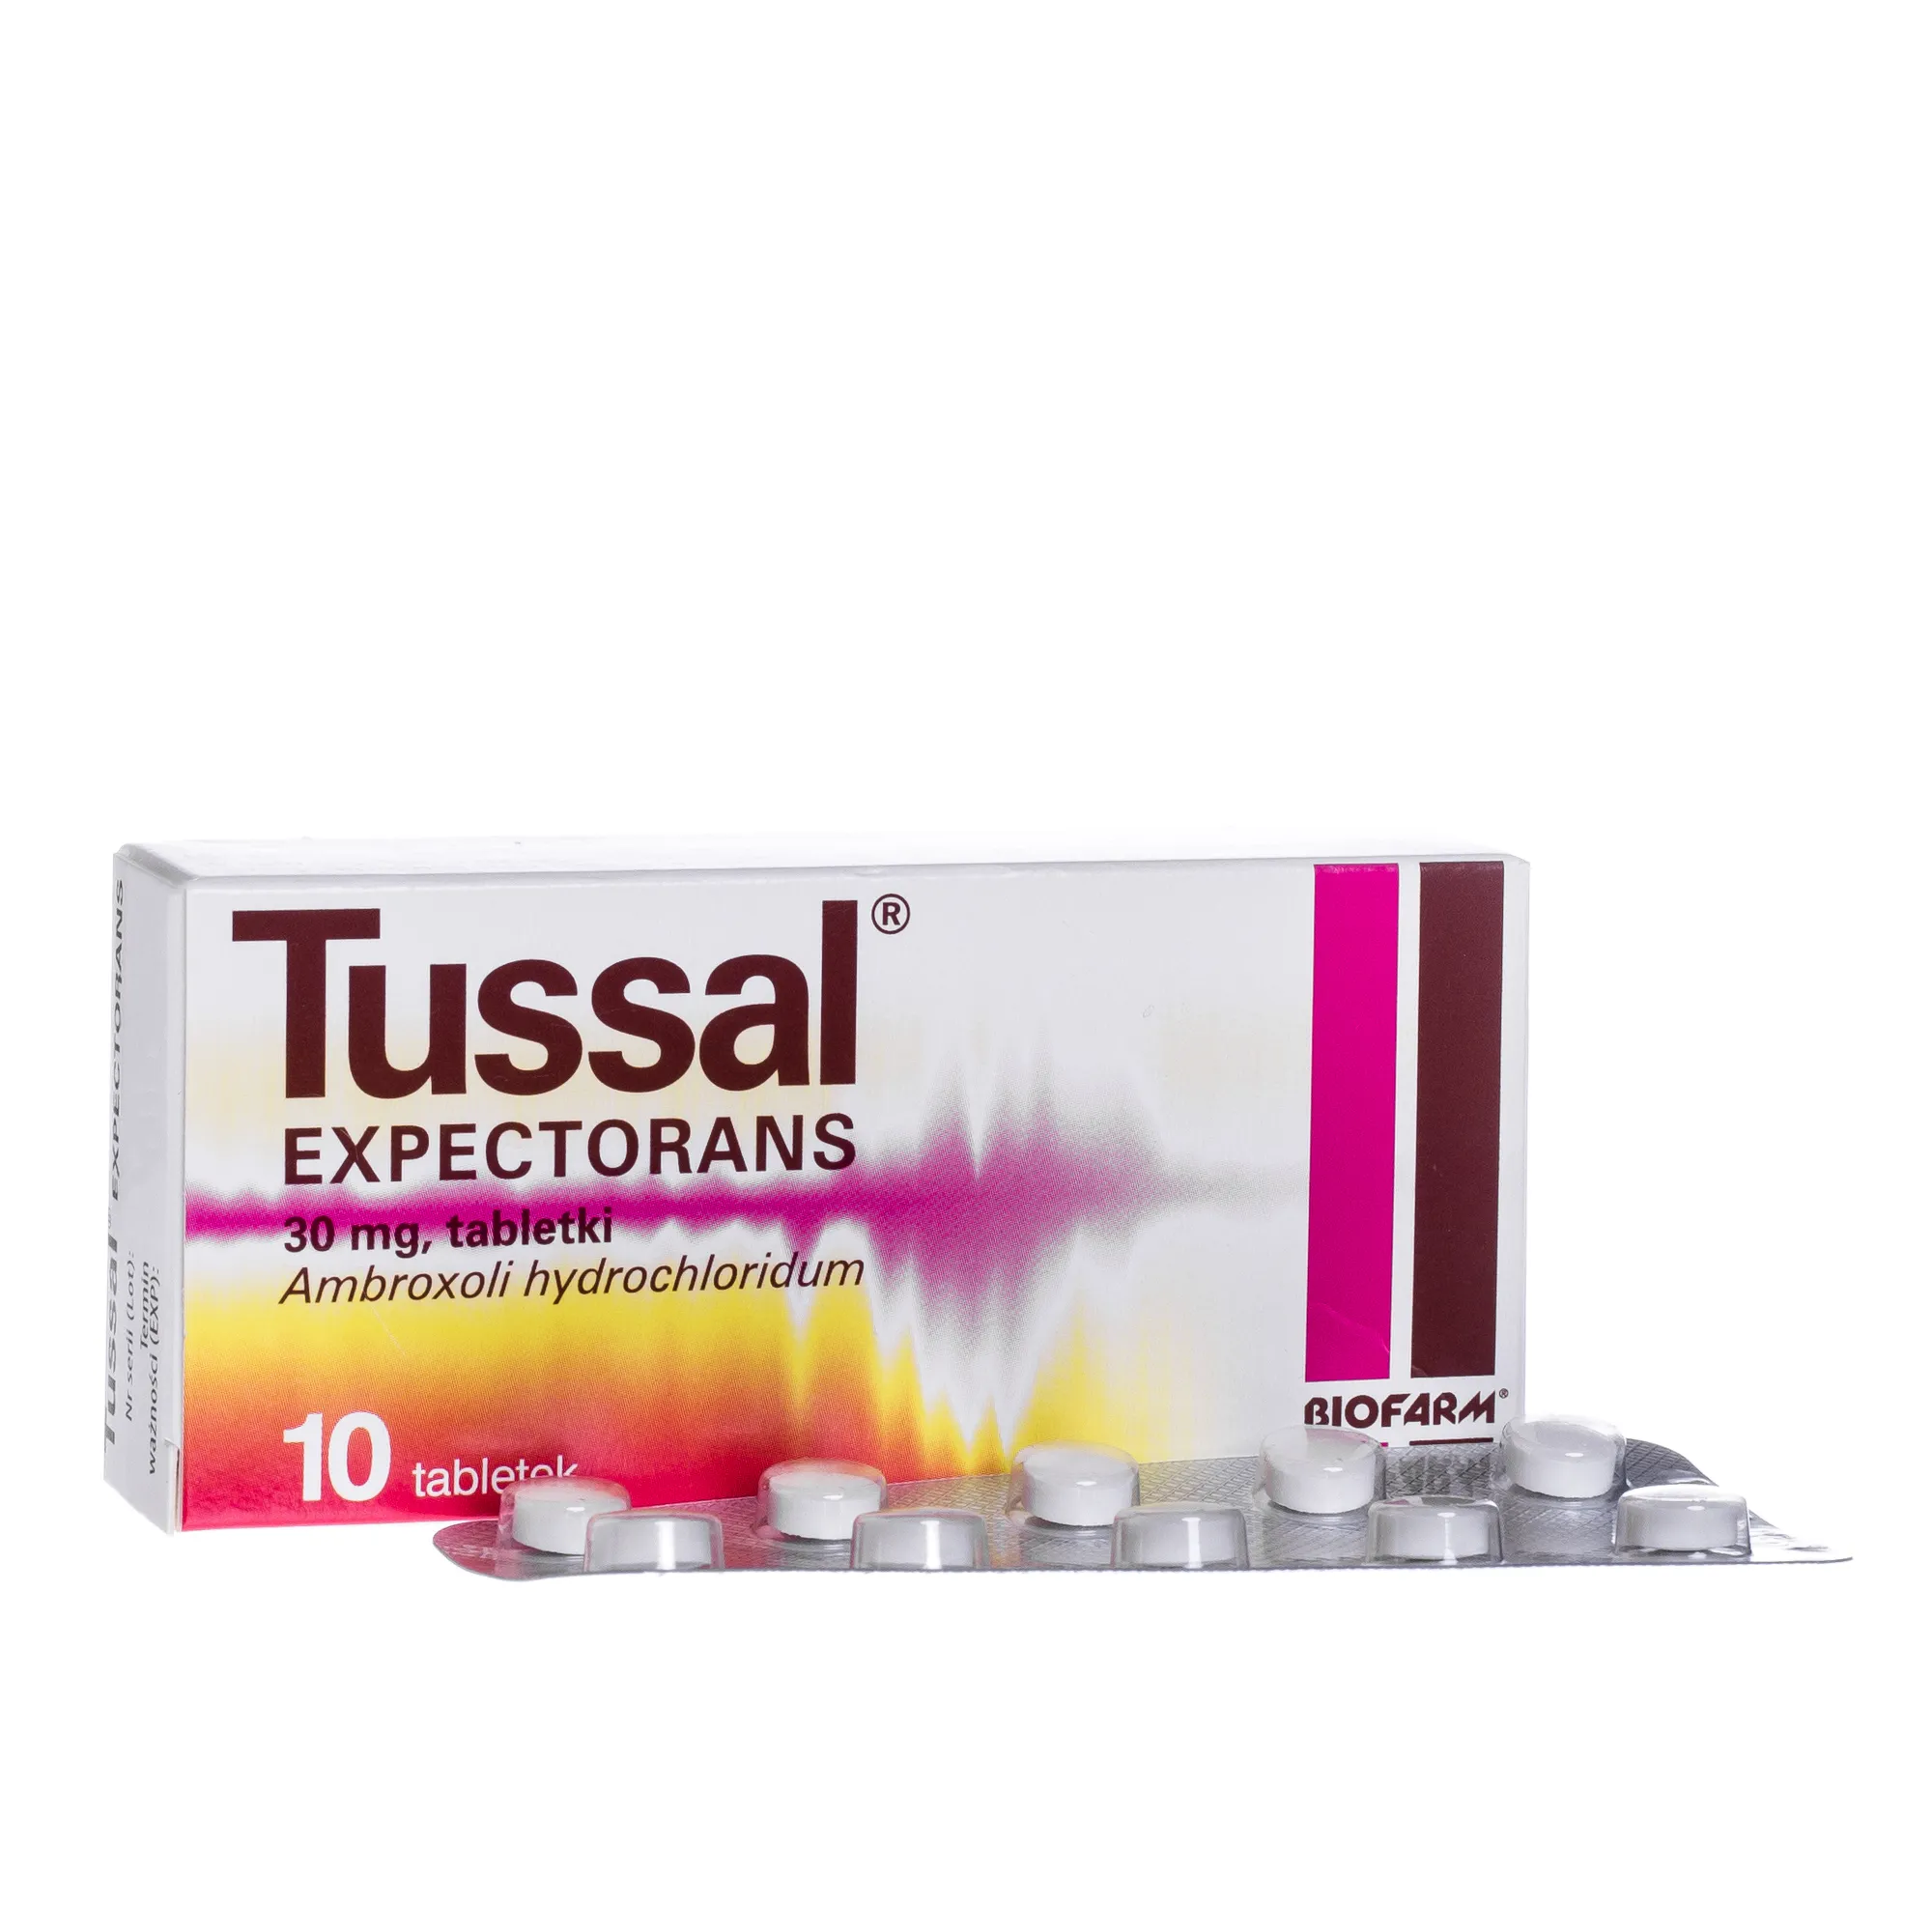 Tussal Expectorans, 30 mg, 10 tabletek